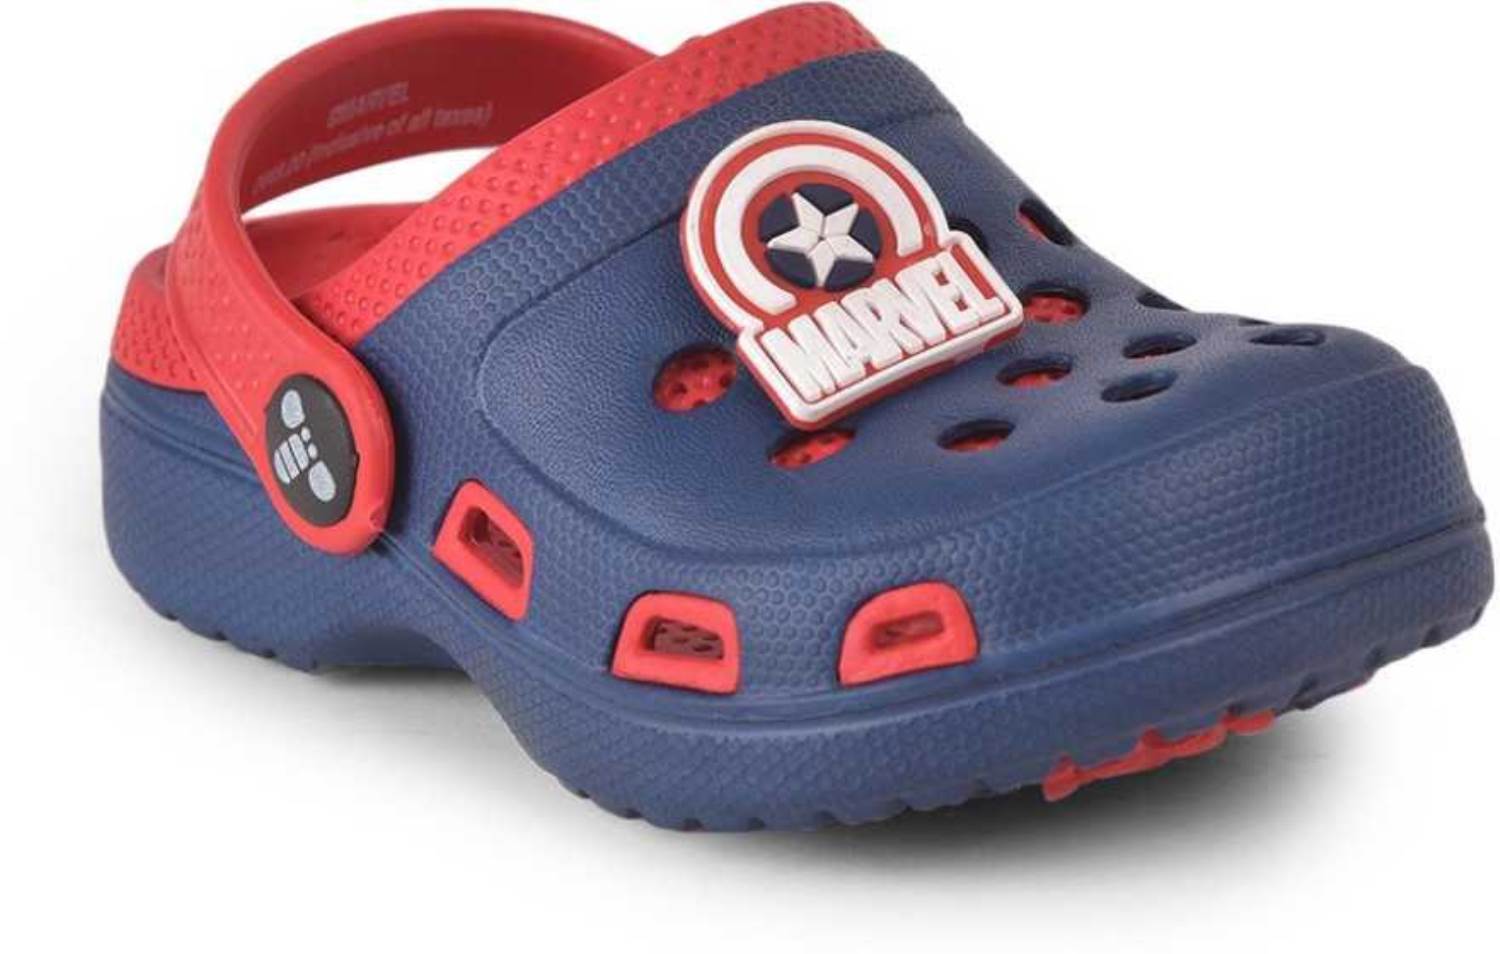 Toothless Brand Boy's MAPBMO3206 Marvel Crocs Sports Sandal Slipper ...